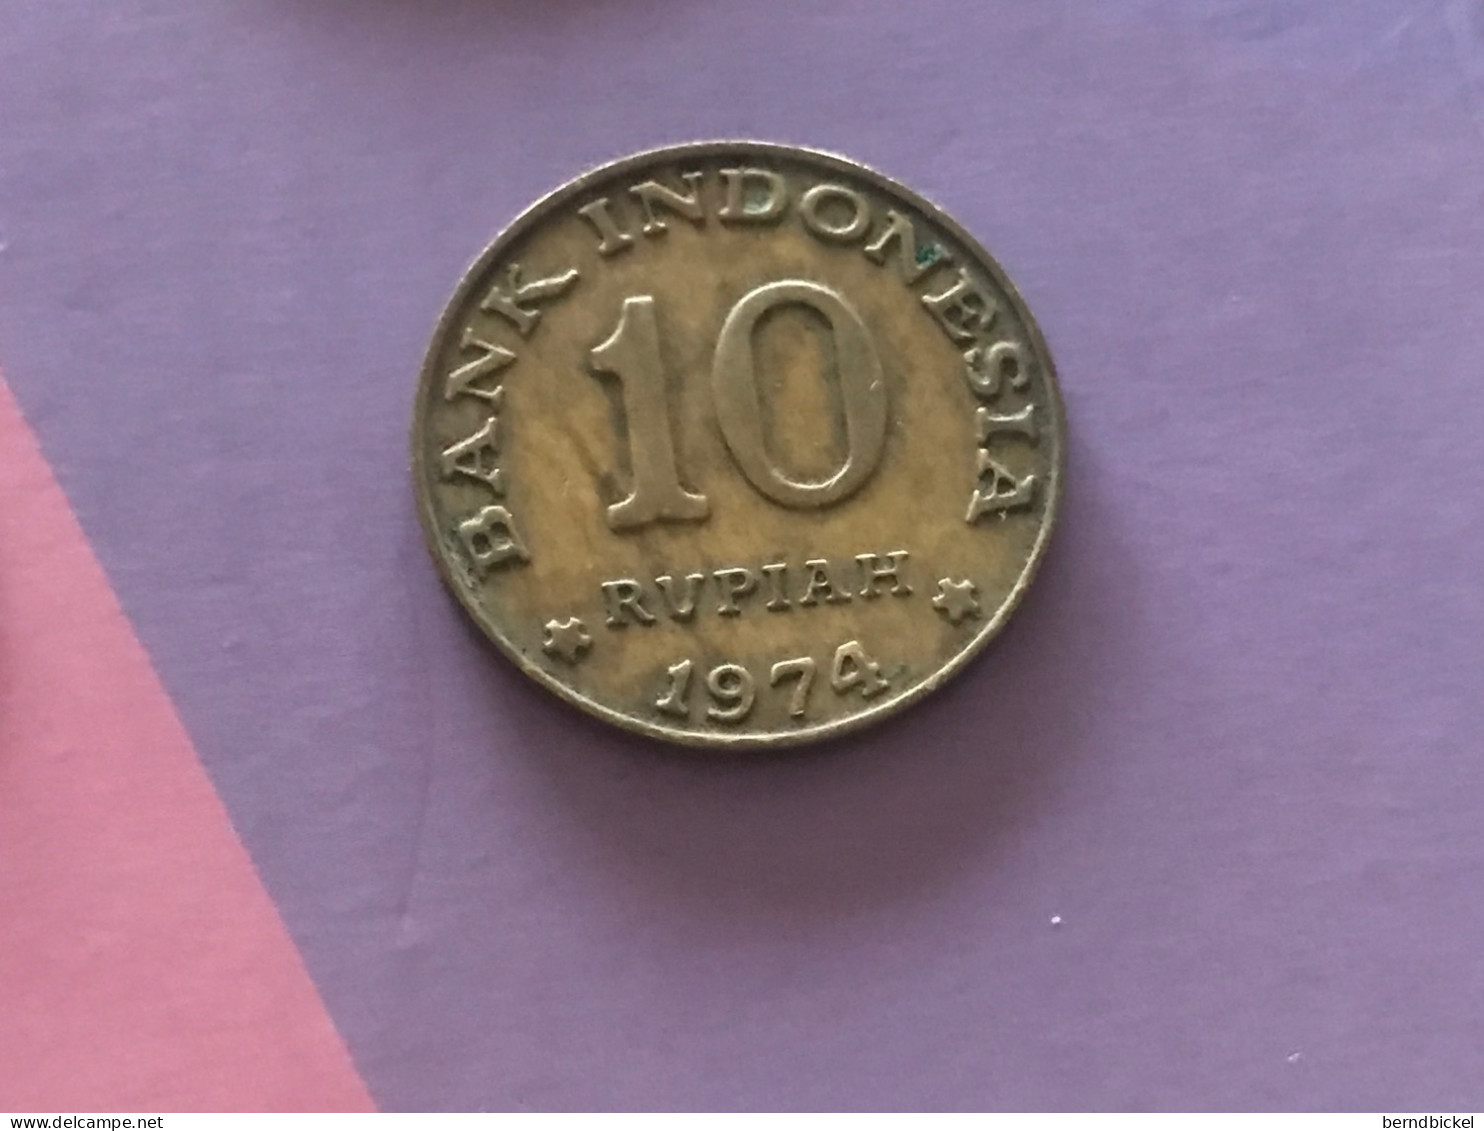 Münze Münzen Umlaufmünze Indonesien 10 Rupien 1974 - Indonesia